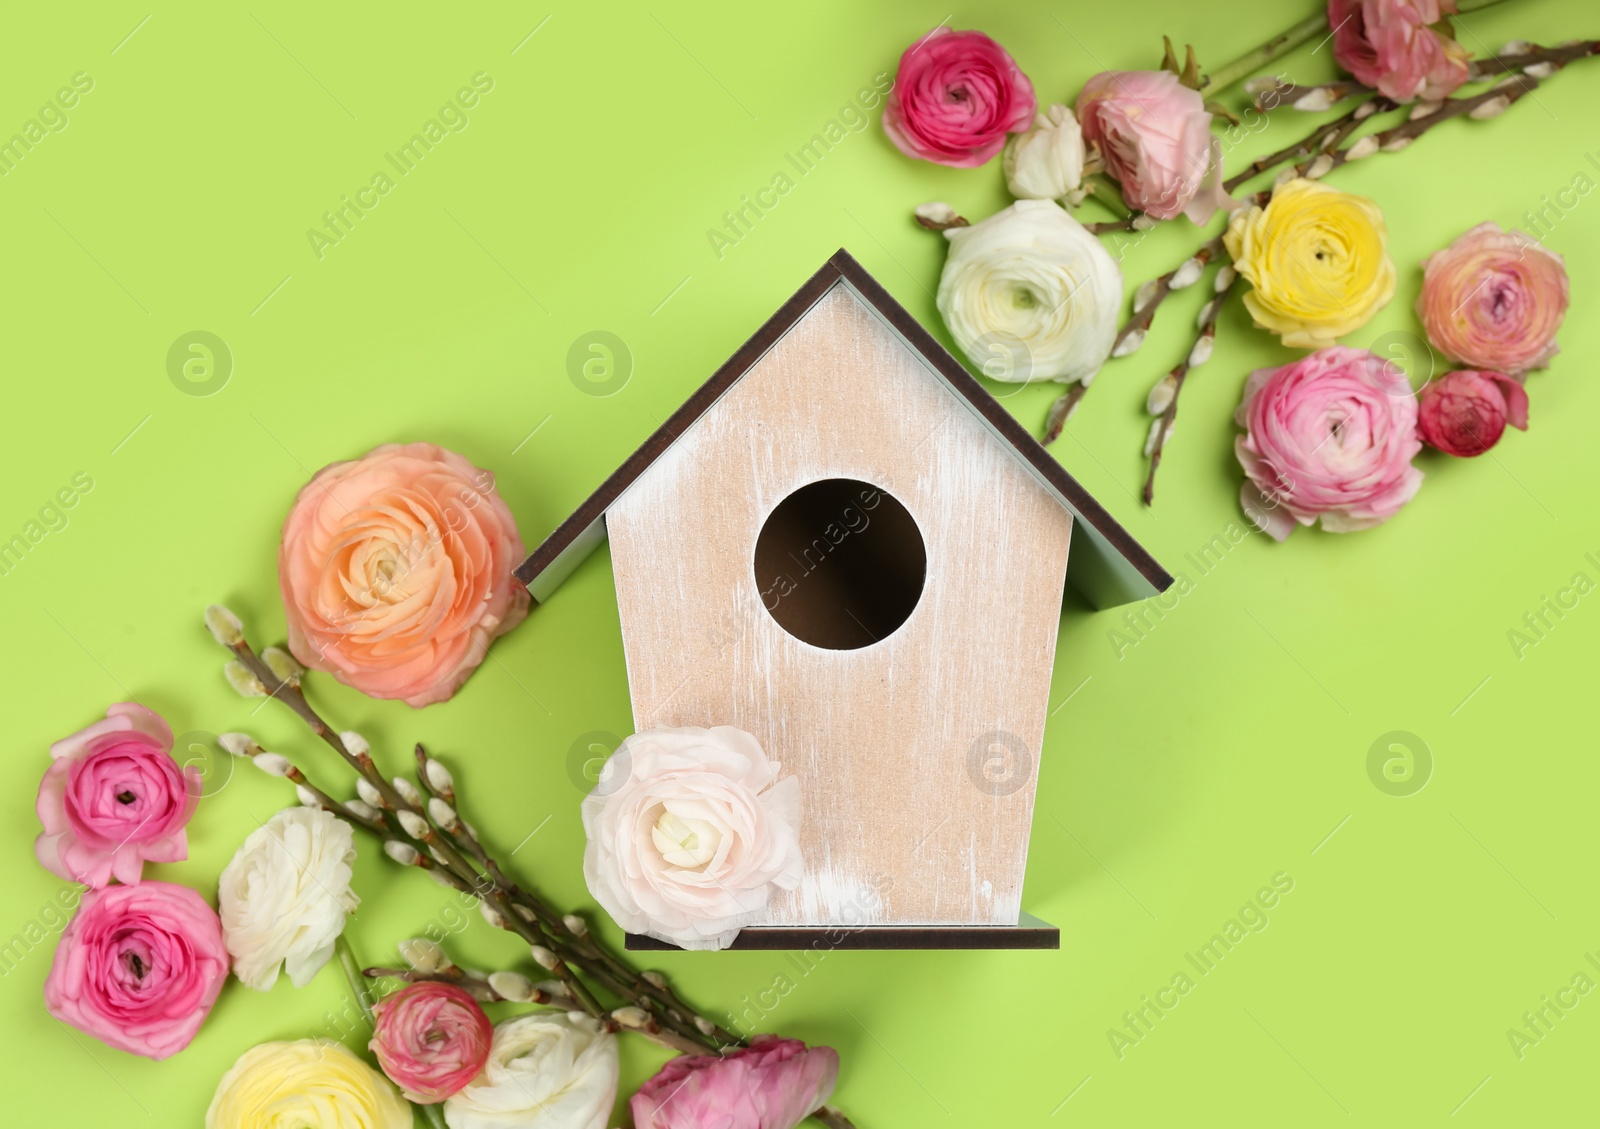 Photo of Stylish bird house and fresh flowers on green background, flat lay